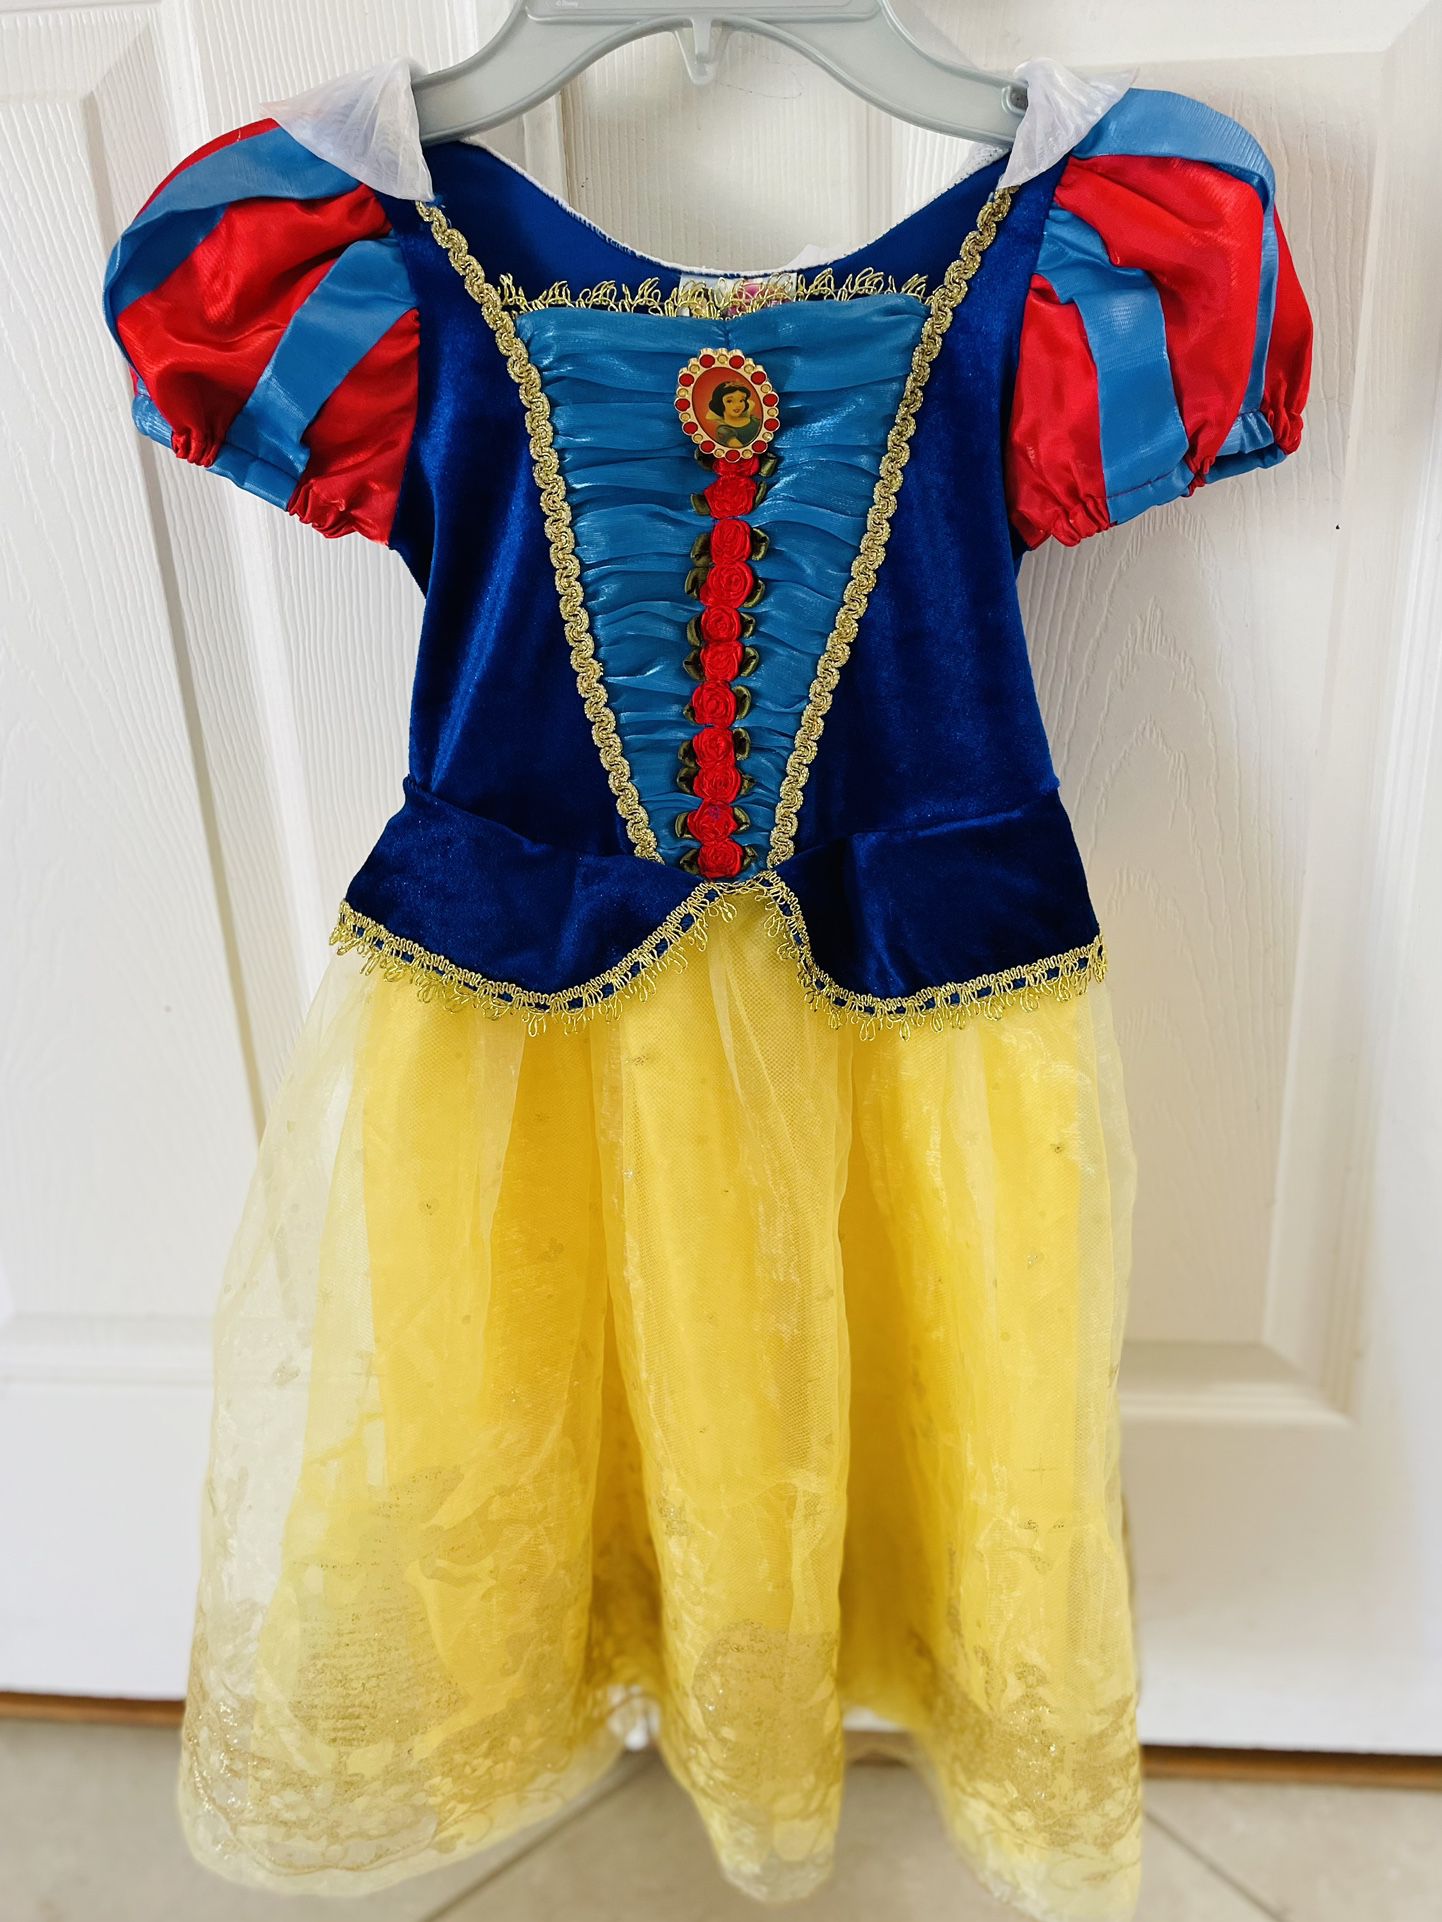 Halloween Costume-Snow White Toddler Dress